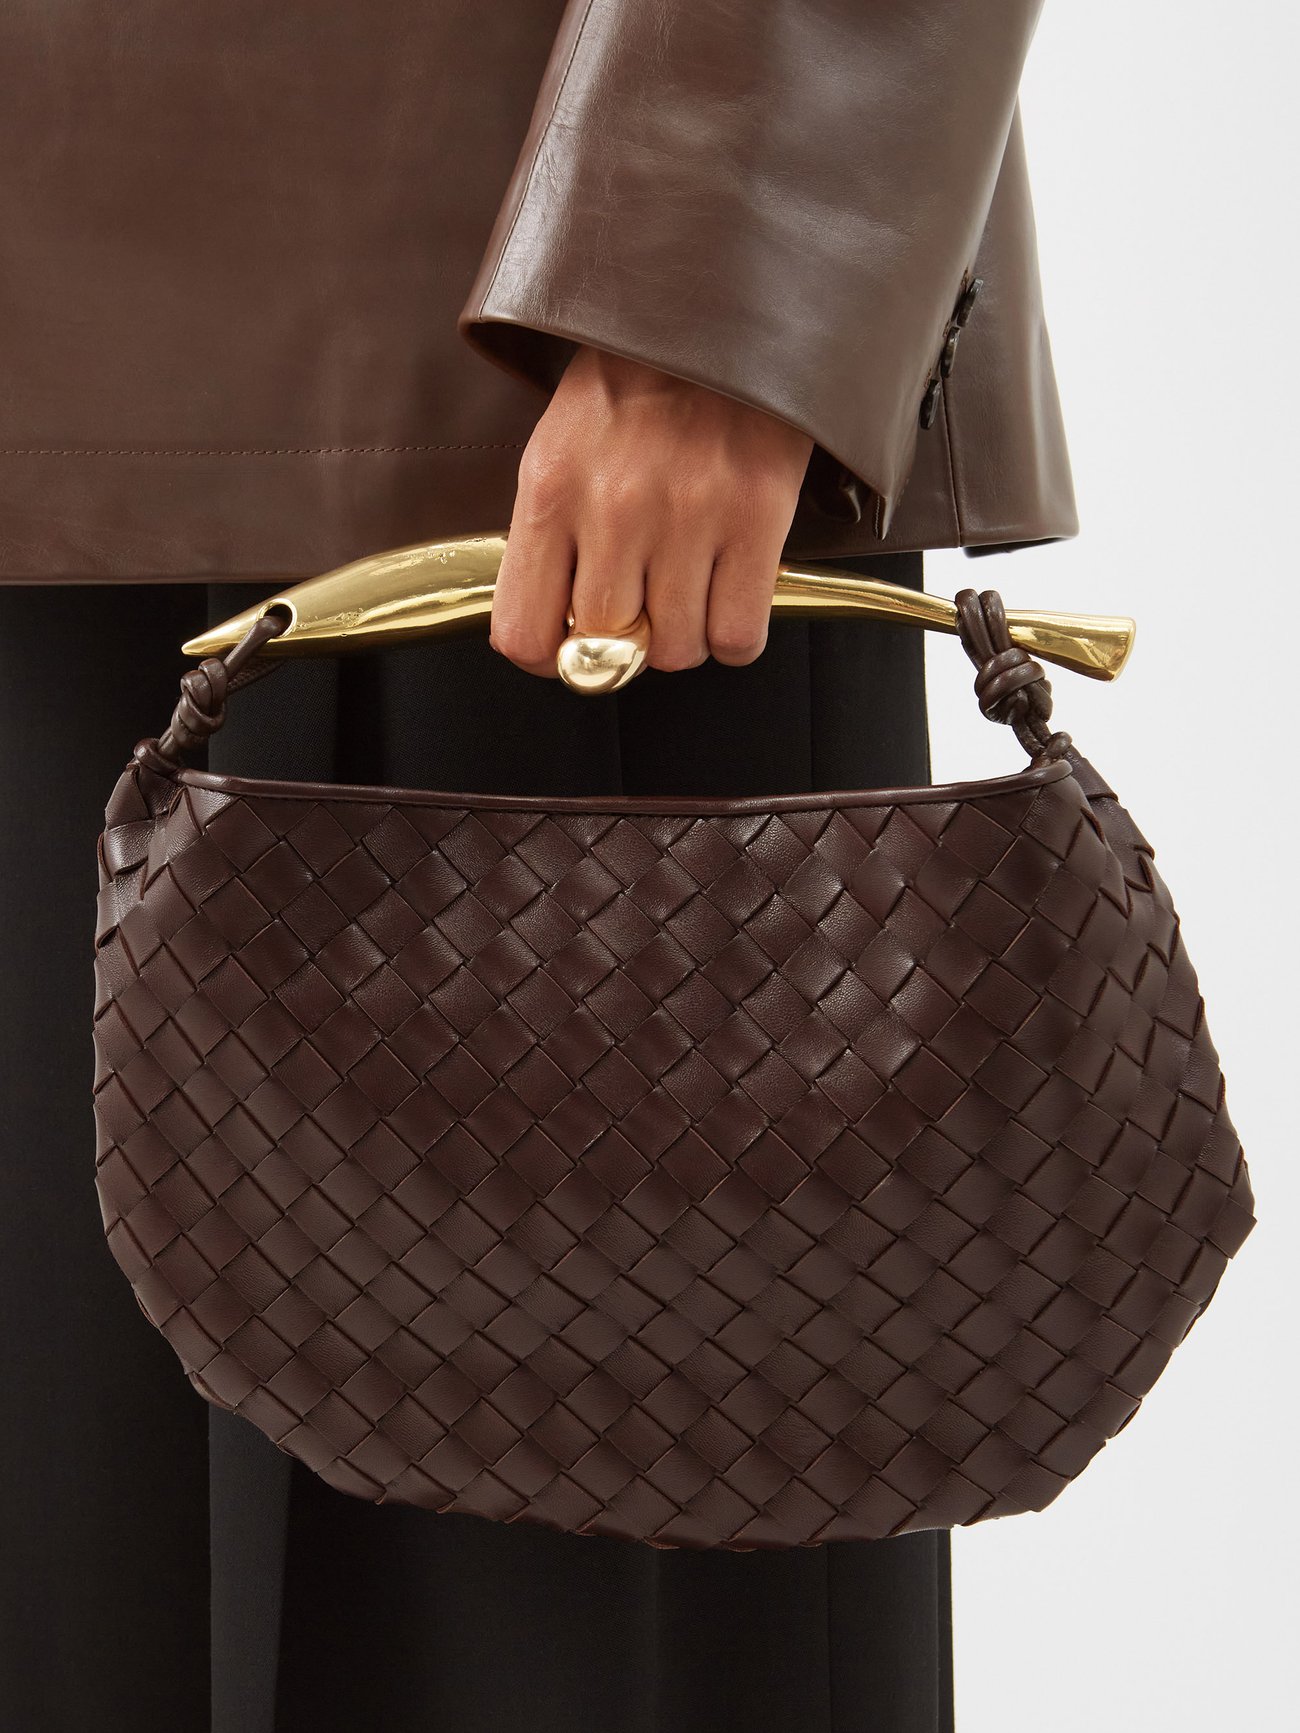 Buy Dacto2pick Fancy Handbag for Girls | Women's Soft Pu Leather Handbag |  Women Fashion Handbags | Tote Bag Shoulder Bag Top Handle Satchel Purse |  Large Capacity Designer Bag for Ladies (